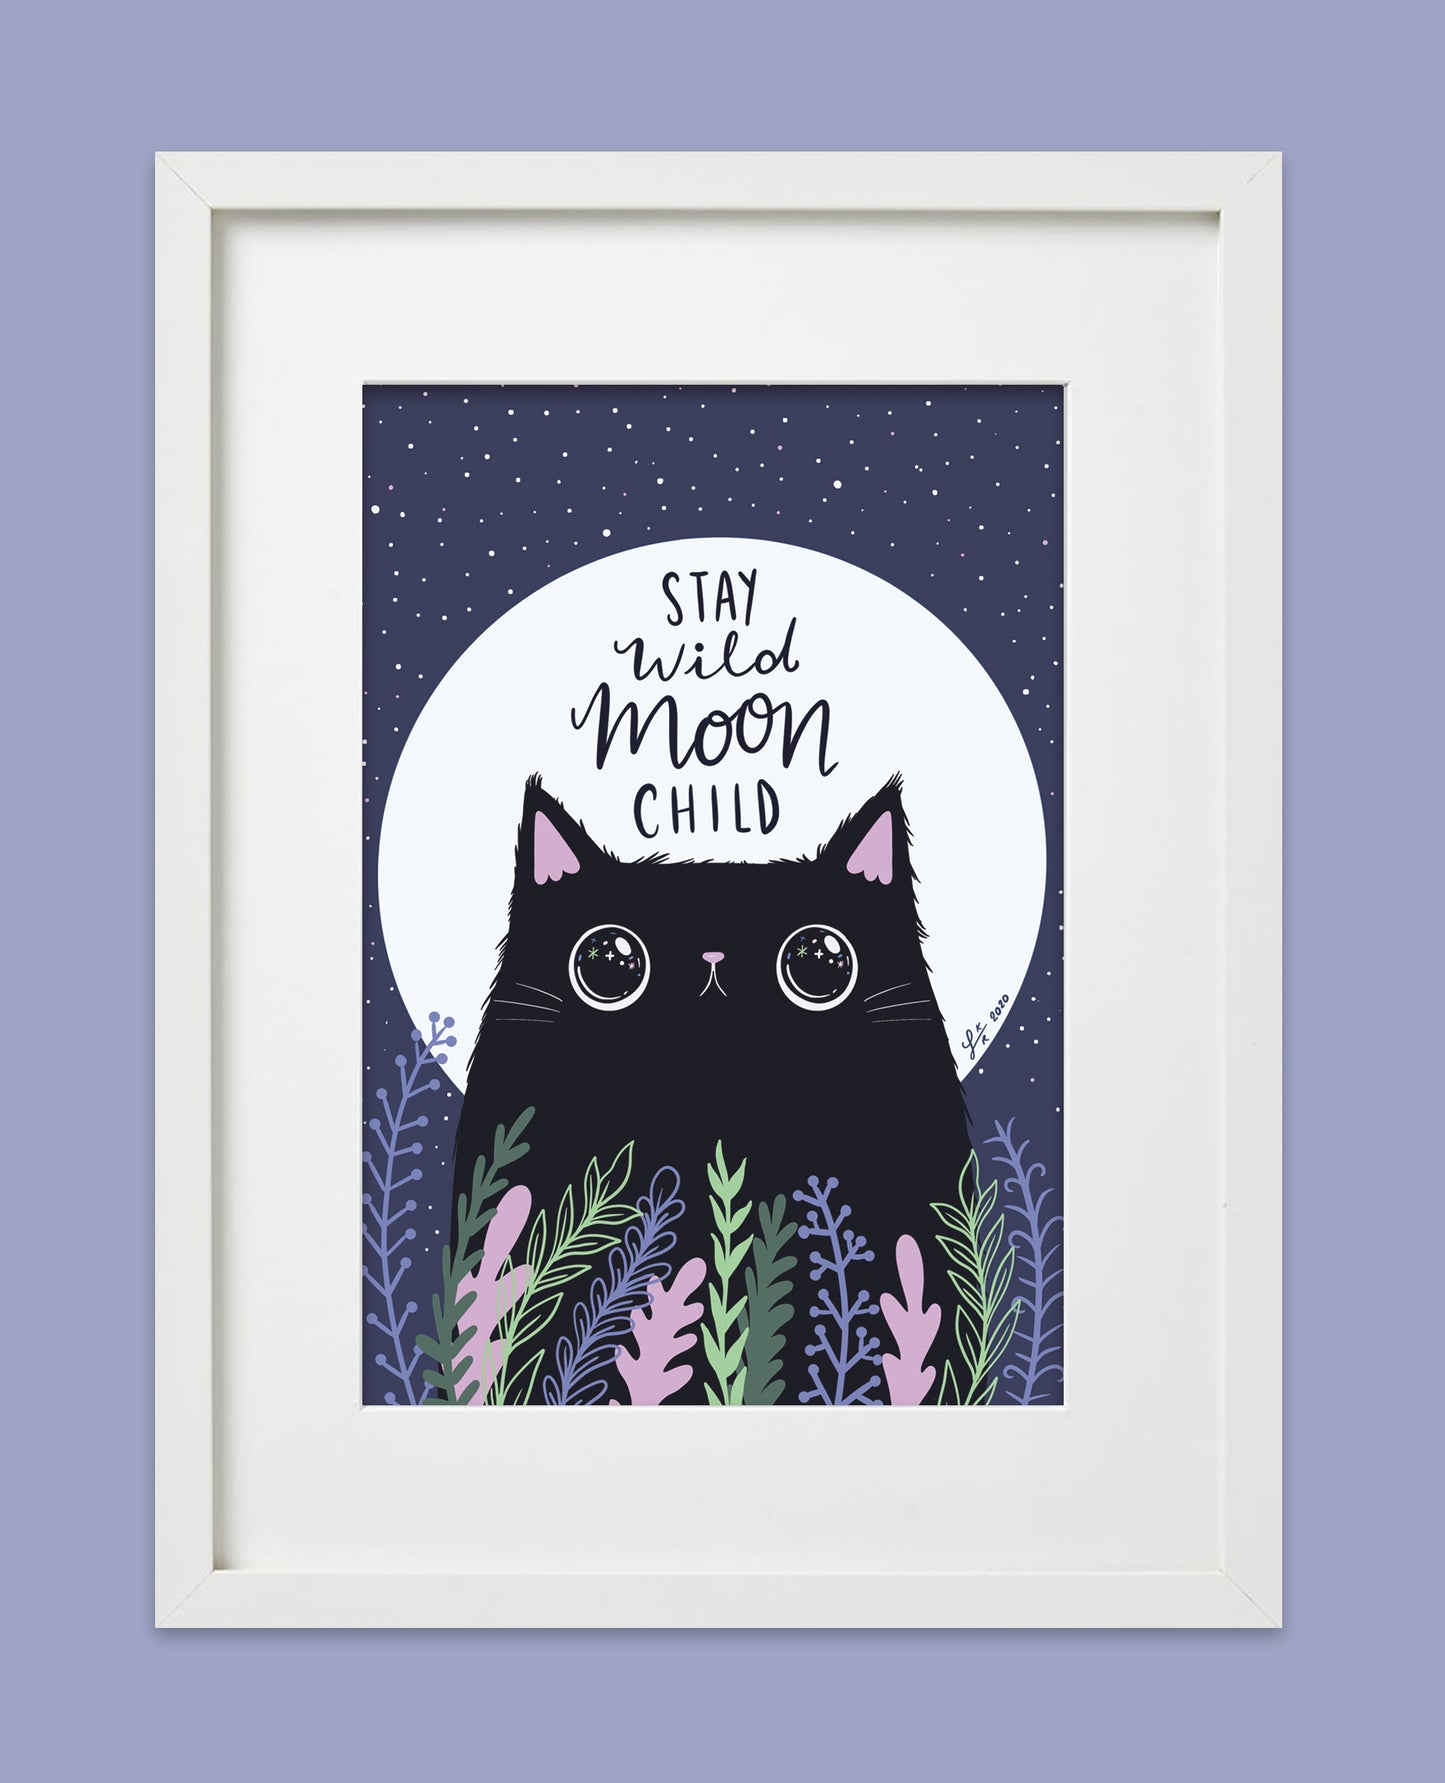 Stay wild moon child - Cute Cat Art Print